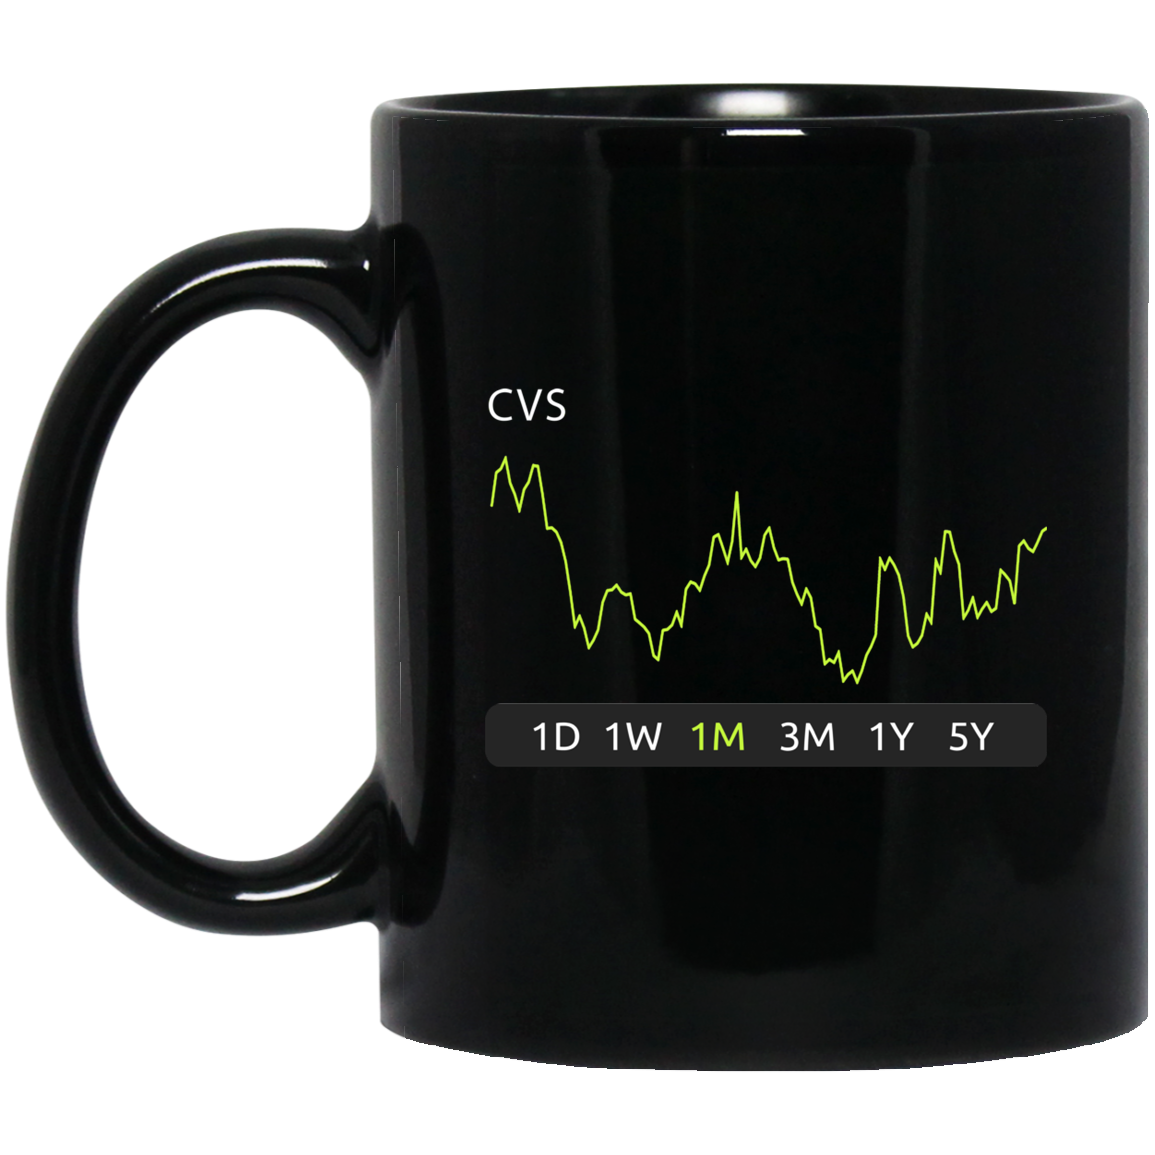 CVS Stock 1m Mug